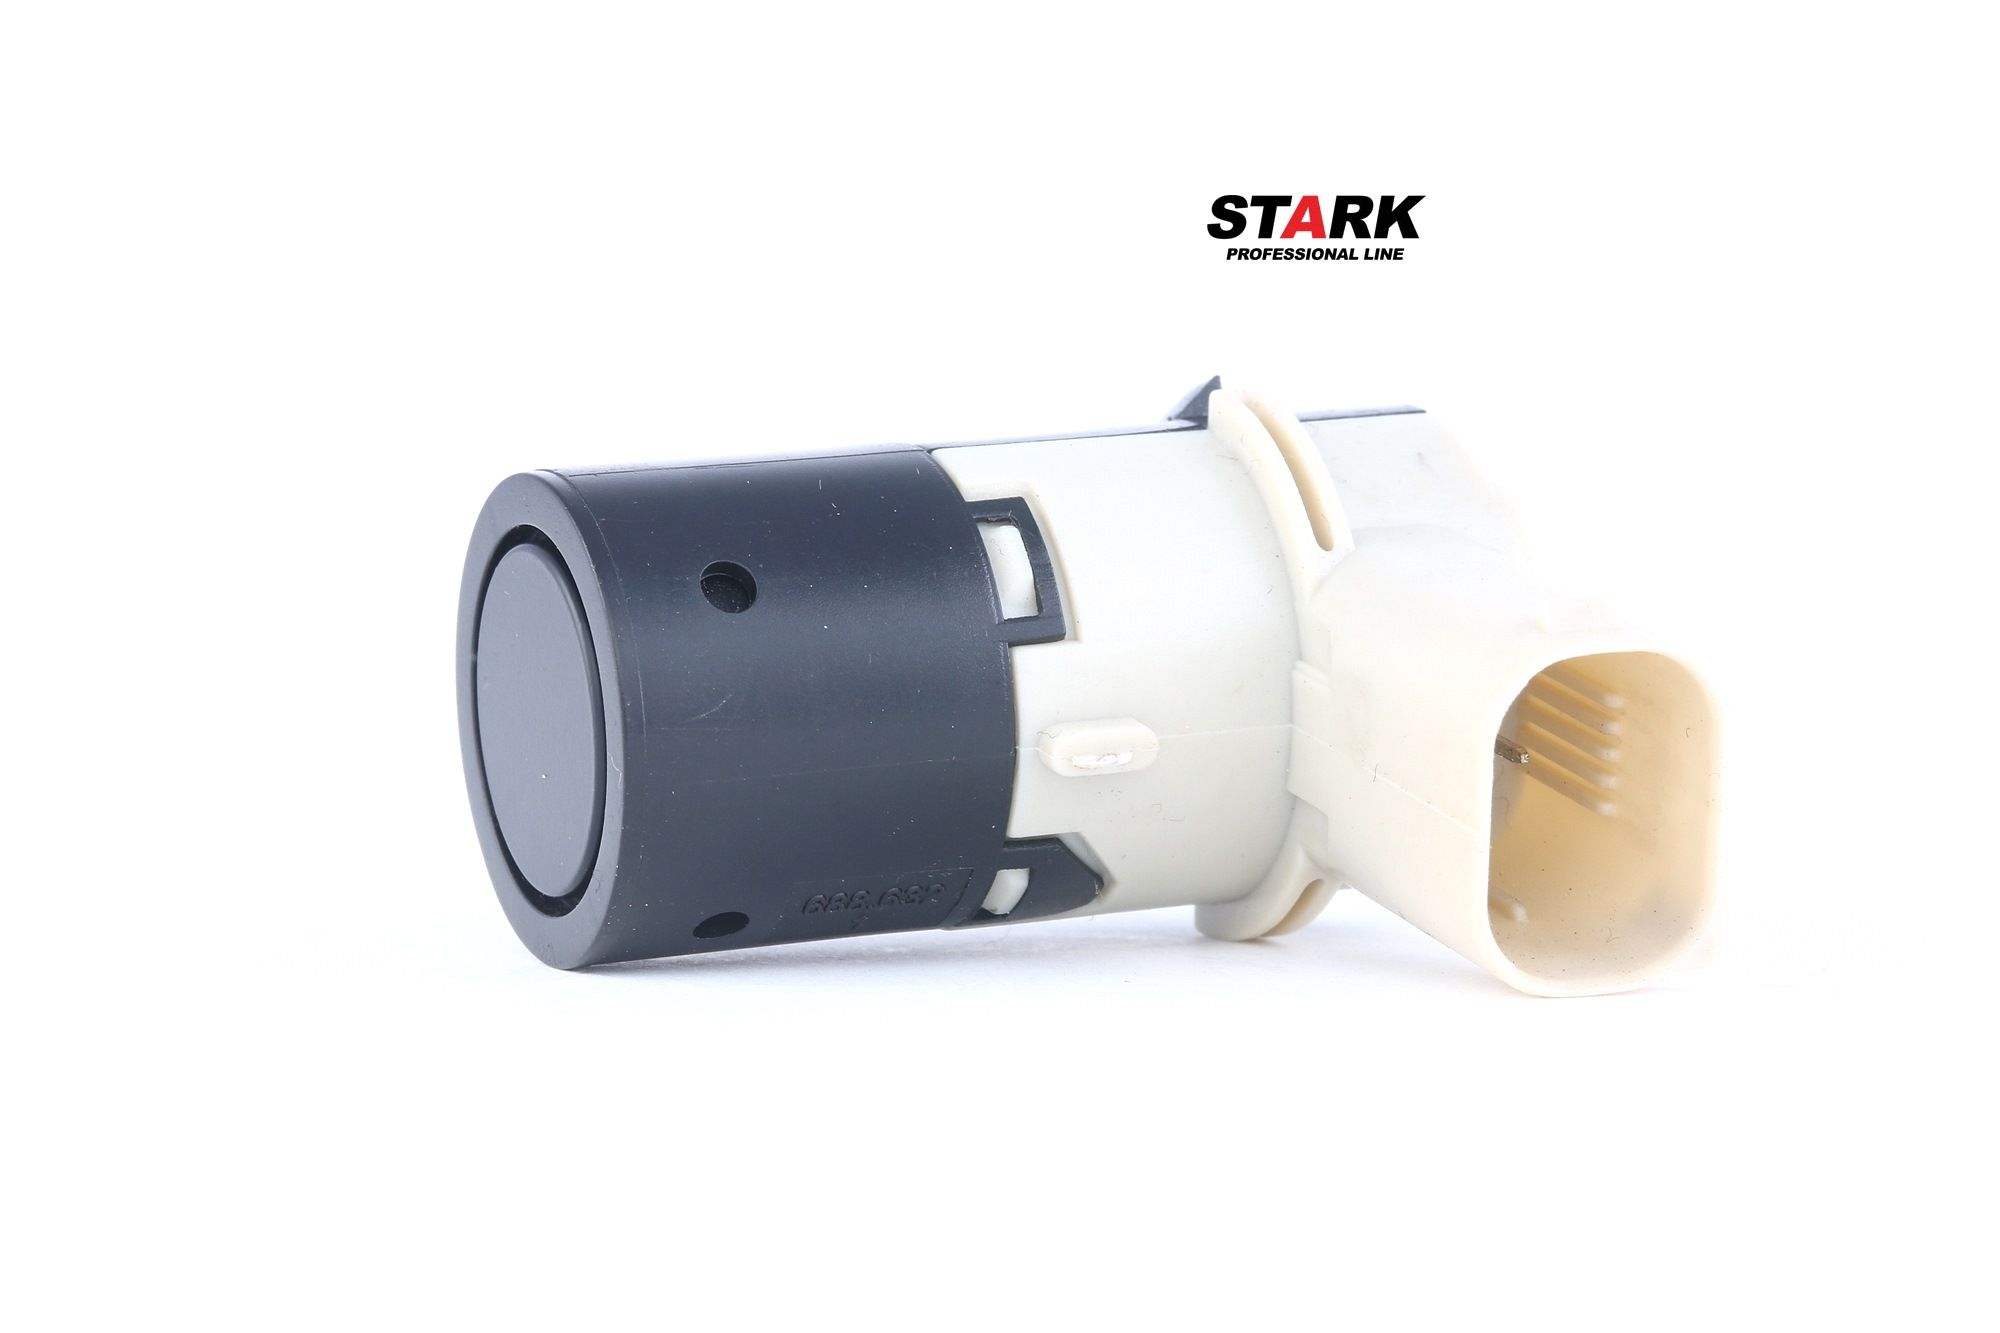 STARK SKPDS-1420025 Parking sensor Front, Rear, Ultrasonic Sensor